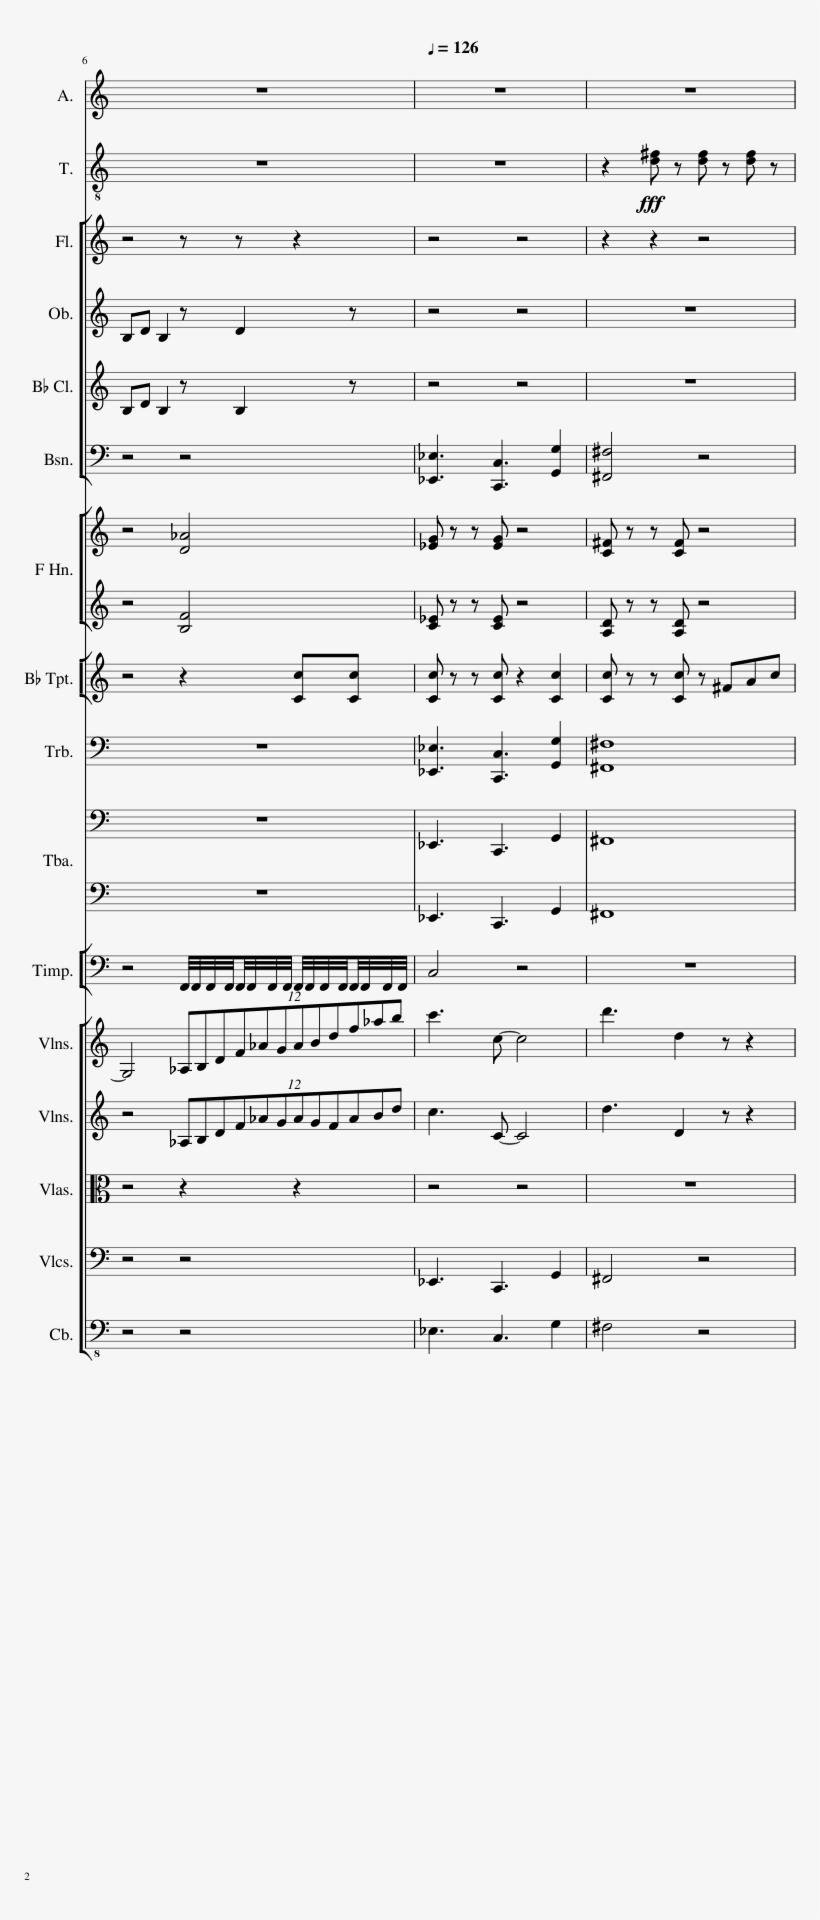 Oh No, Mojo Jojo Sheet Music 2 Of 5 Pages - Sheet Music, transparent png #3162769